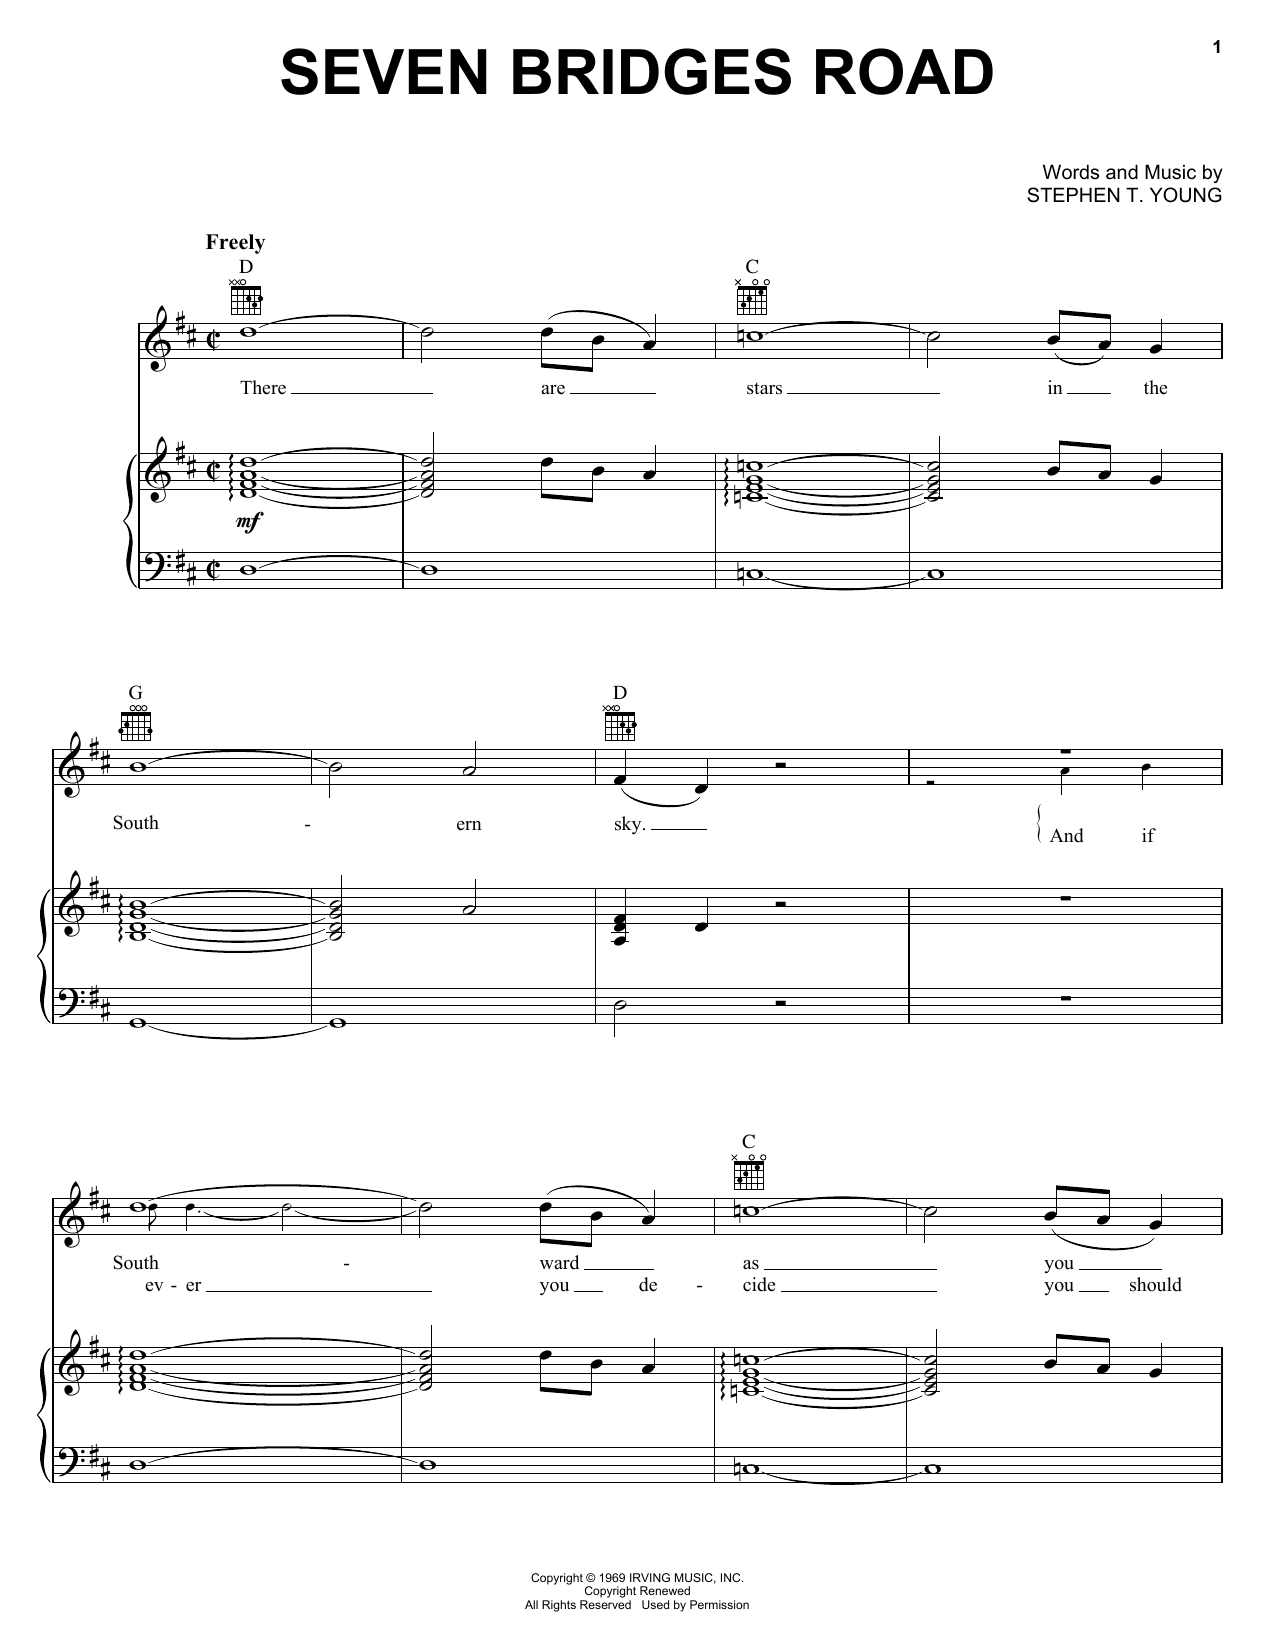 Eagles Seven Bridges Road Sheet Music Notes & Chords for Ukulele with strumming patterns - Download or Print PDF